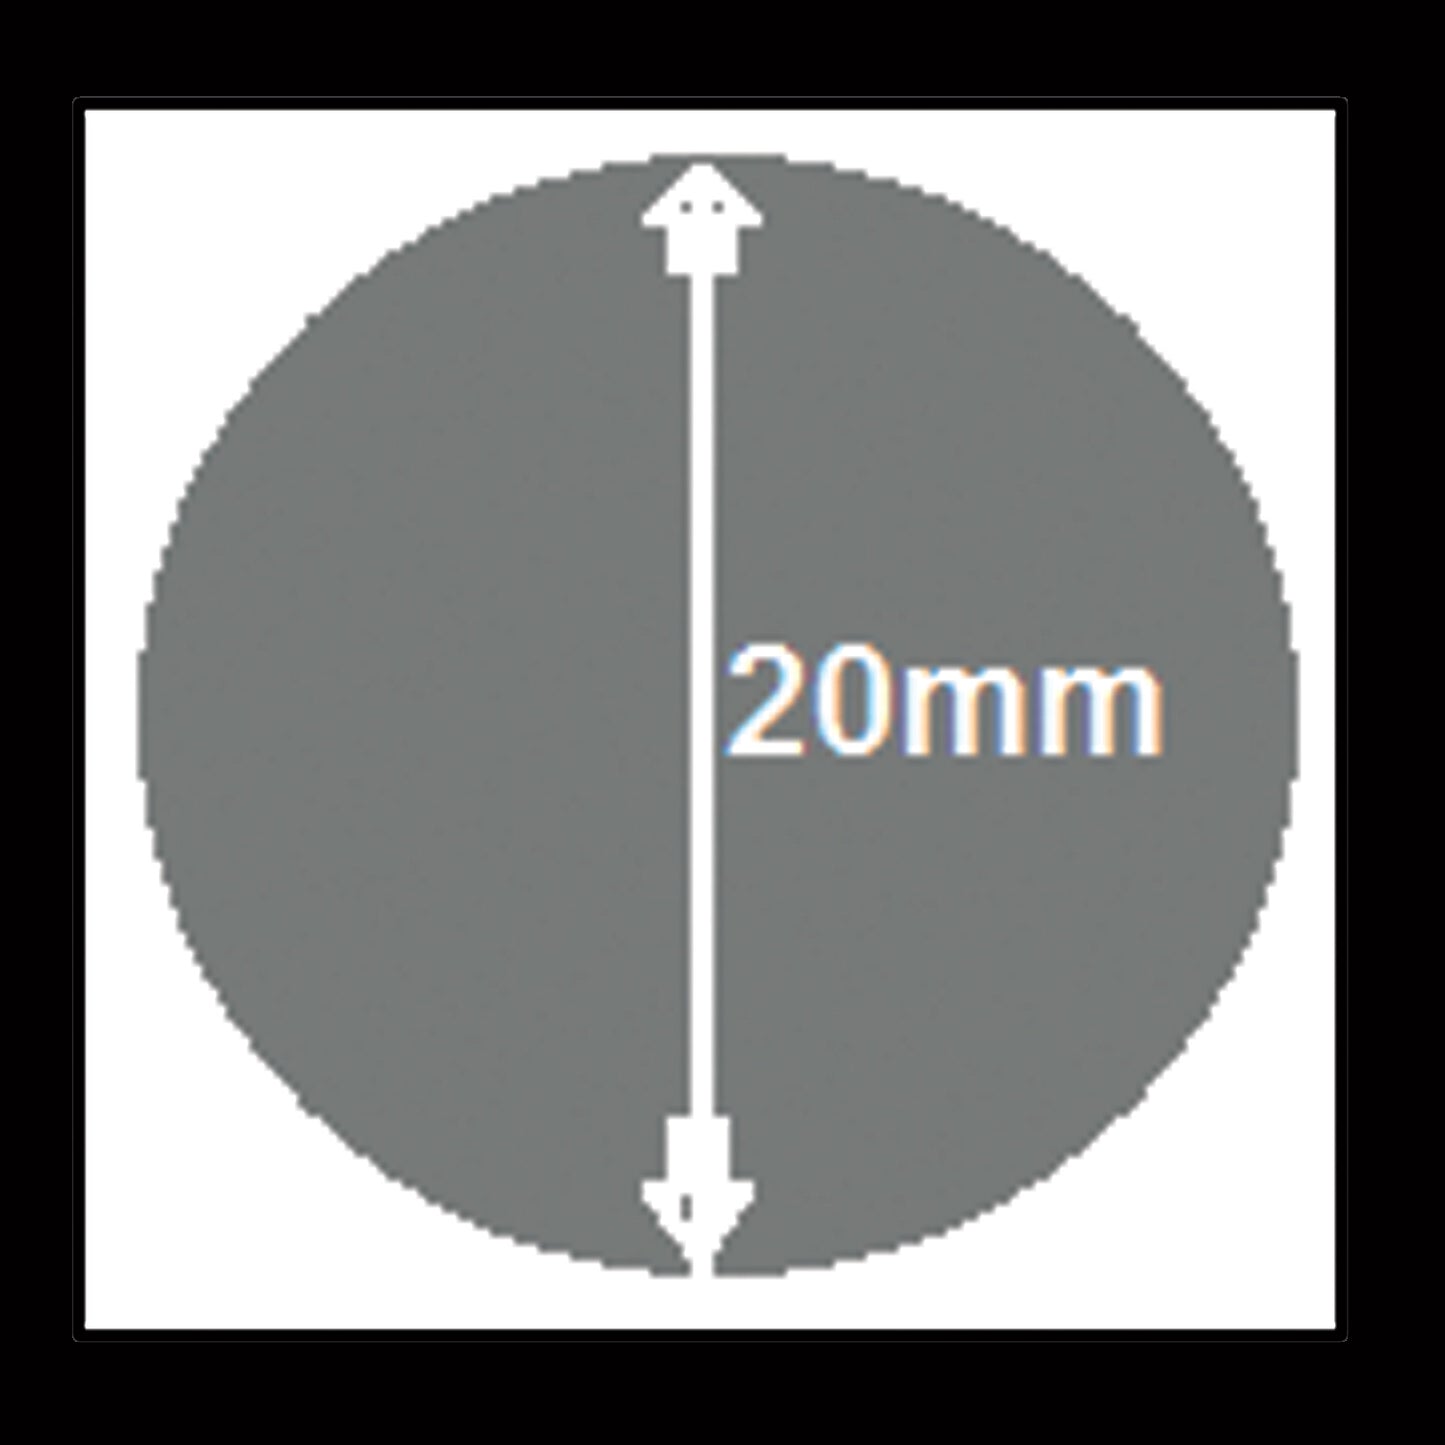 Prinz Self adhesive coin holders (17.5-39.5mm)